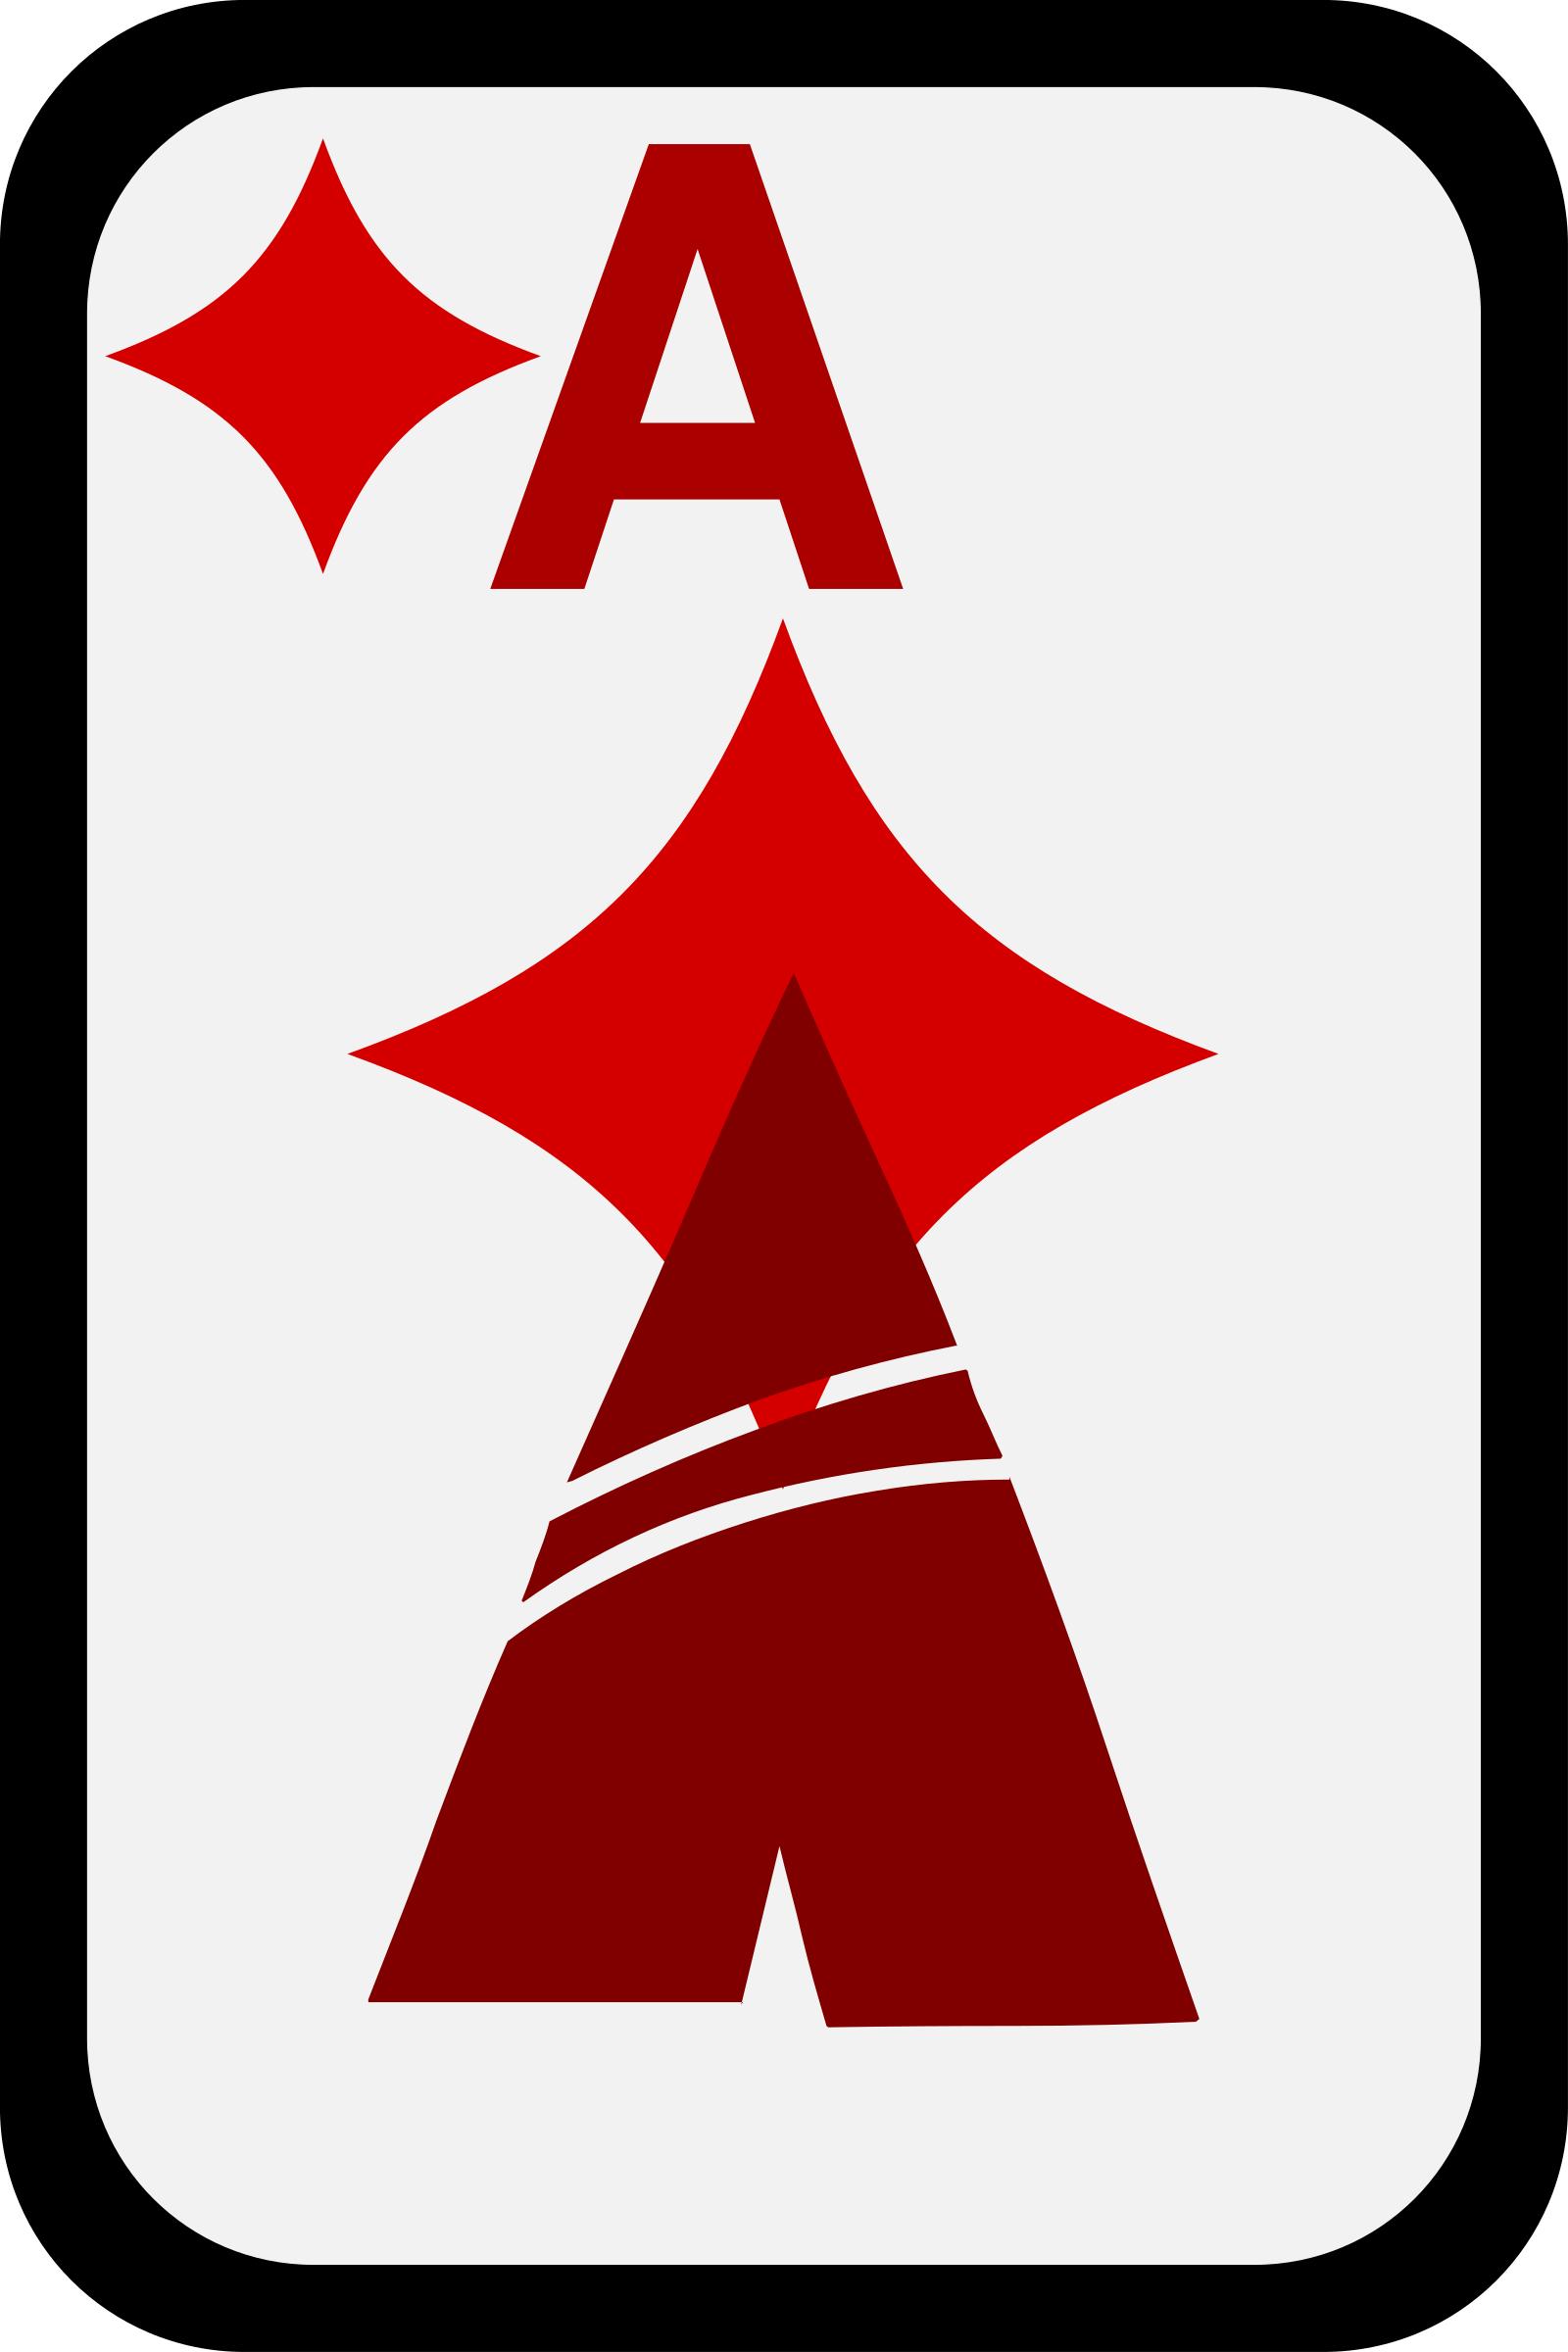 Ace of Diamonds icons